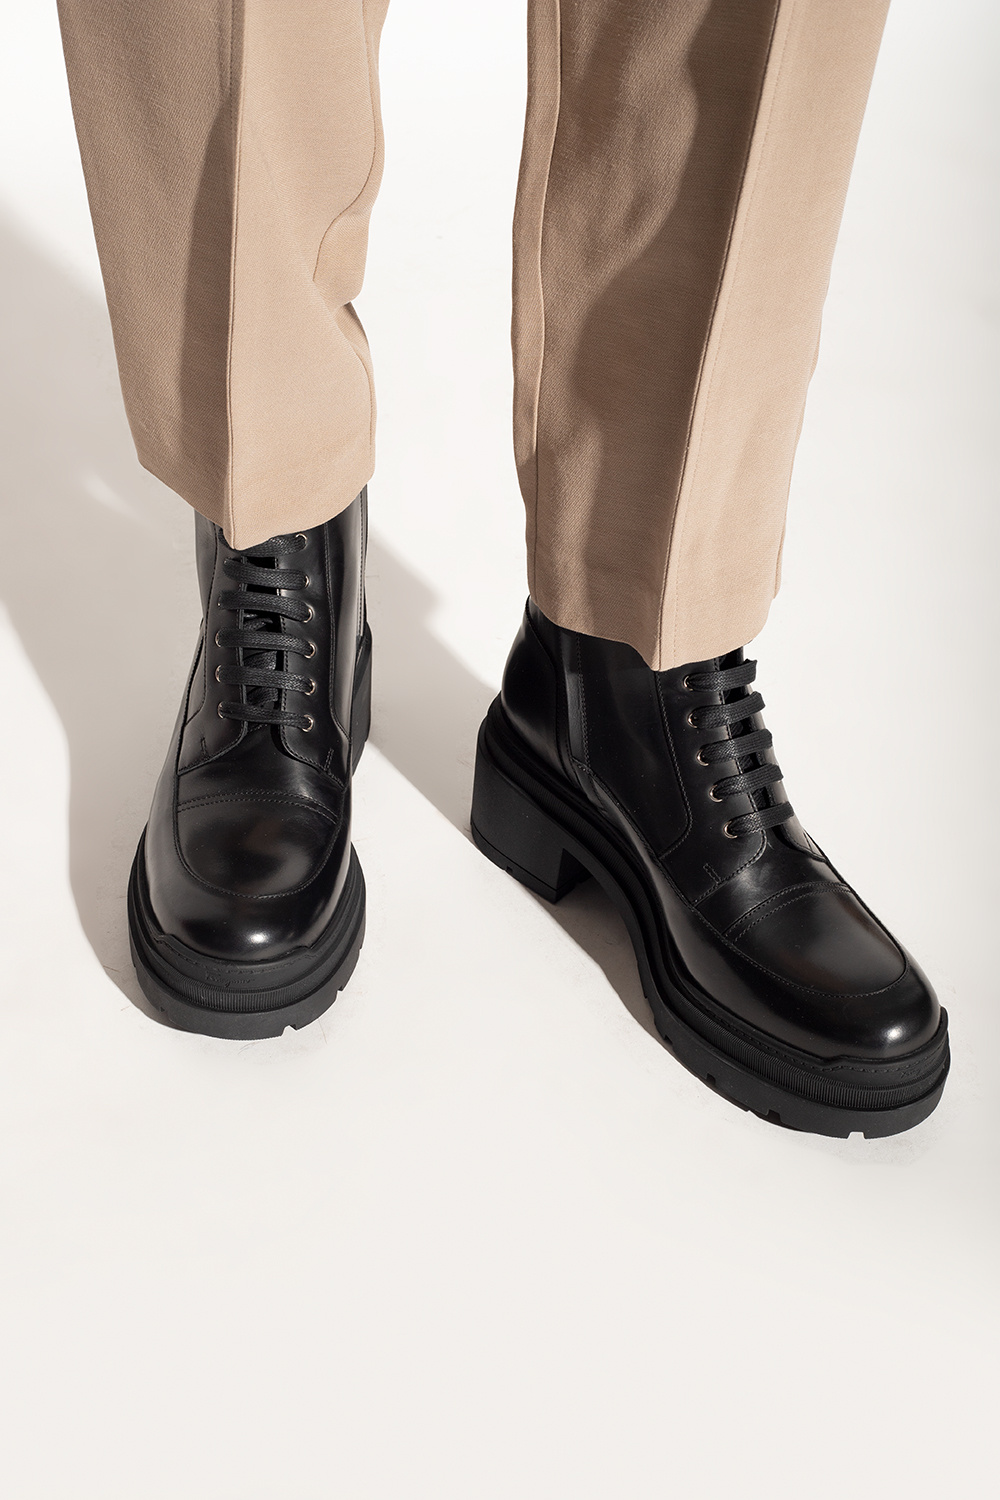 Salvatore Ferragamo ‘Lober’ heeled Perlen boots